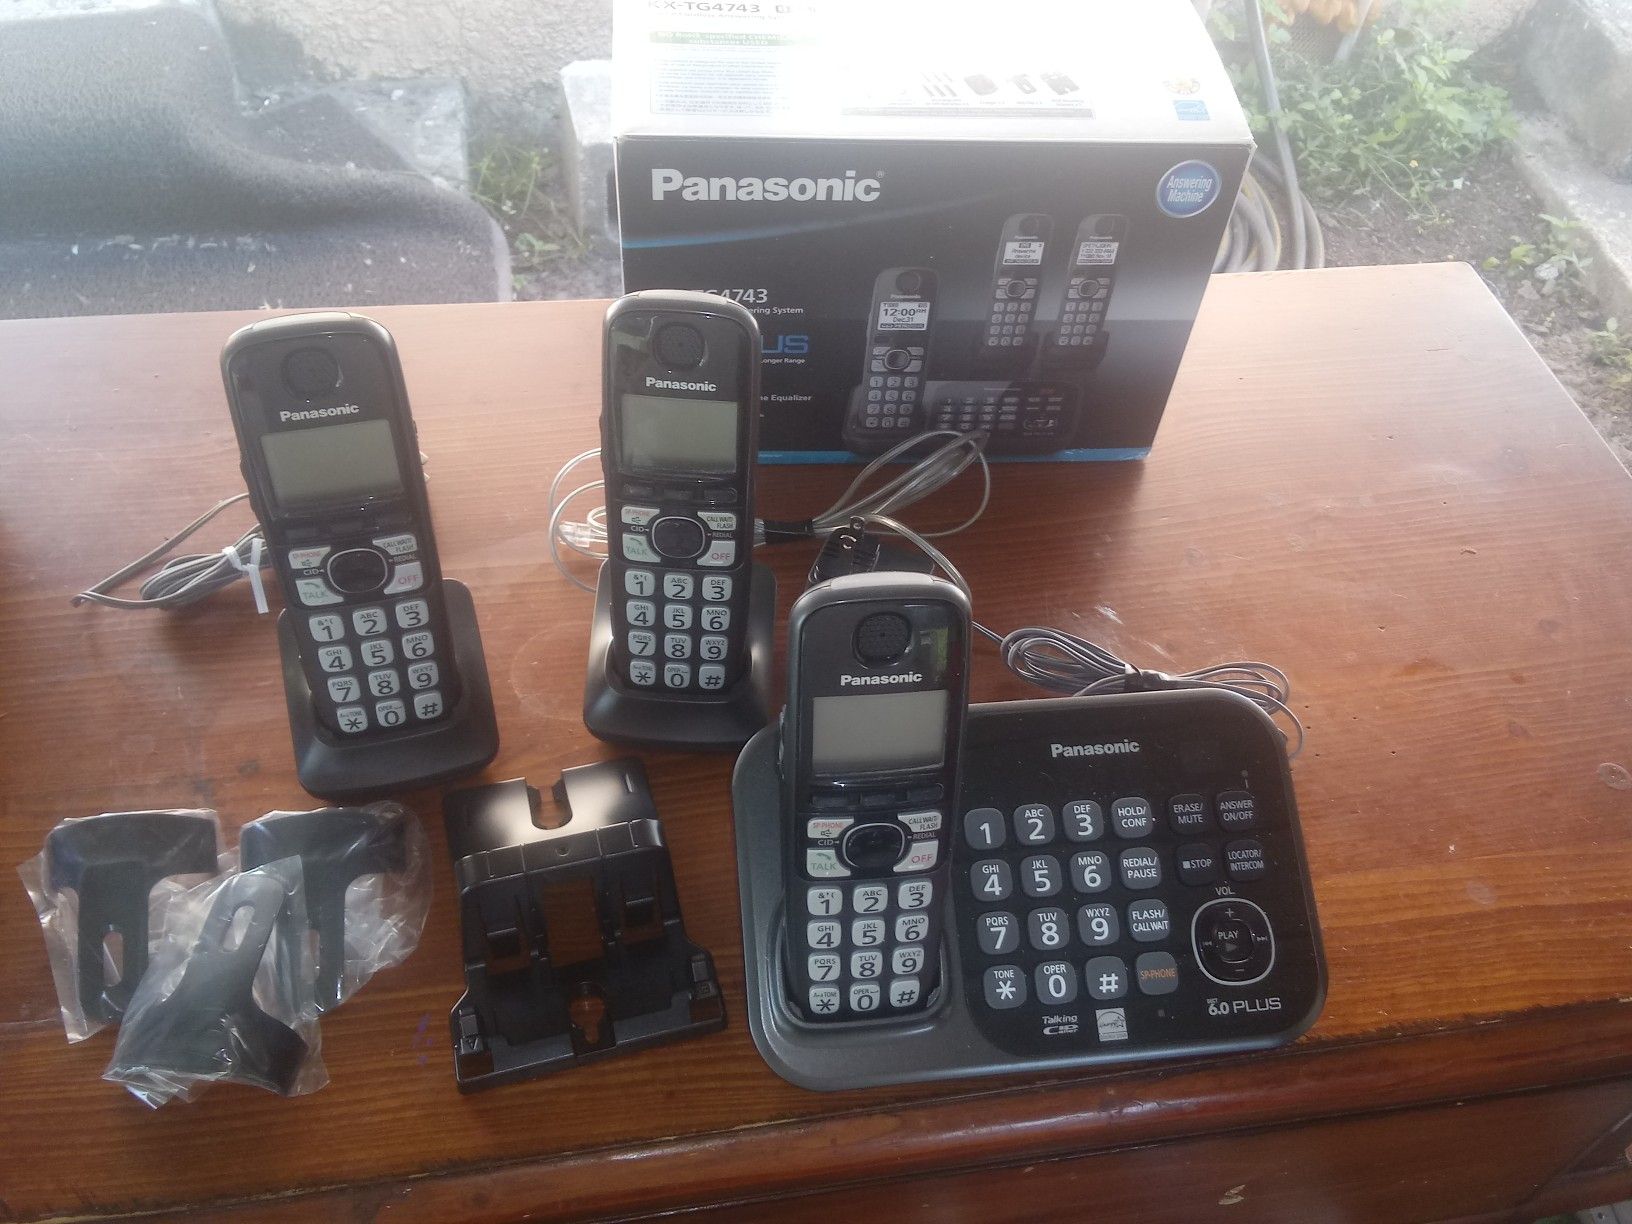 Panasonic kx-tg 4743 Phones